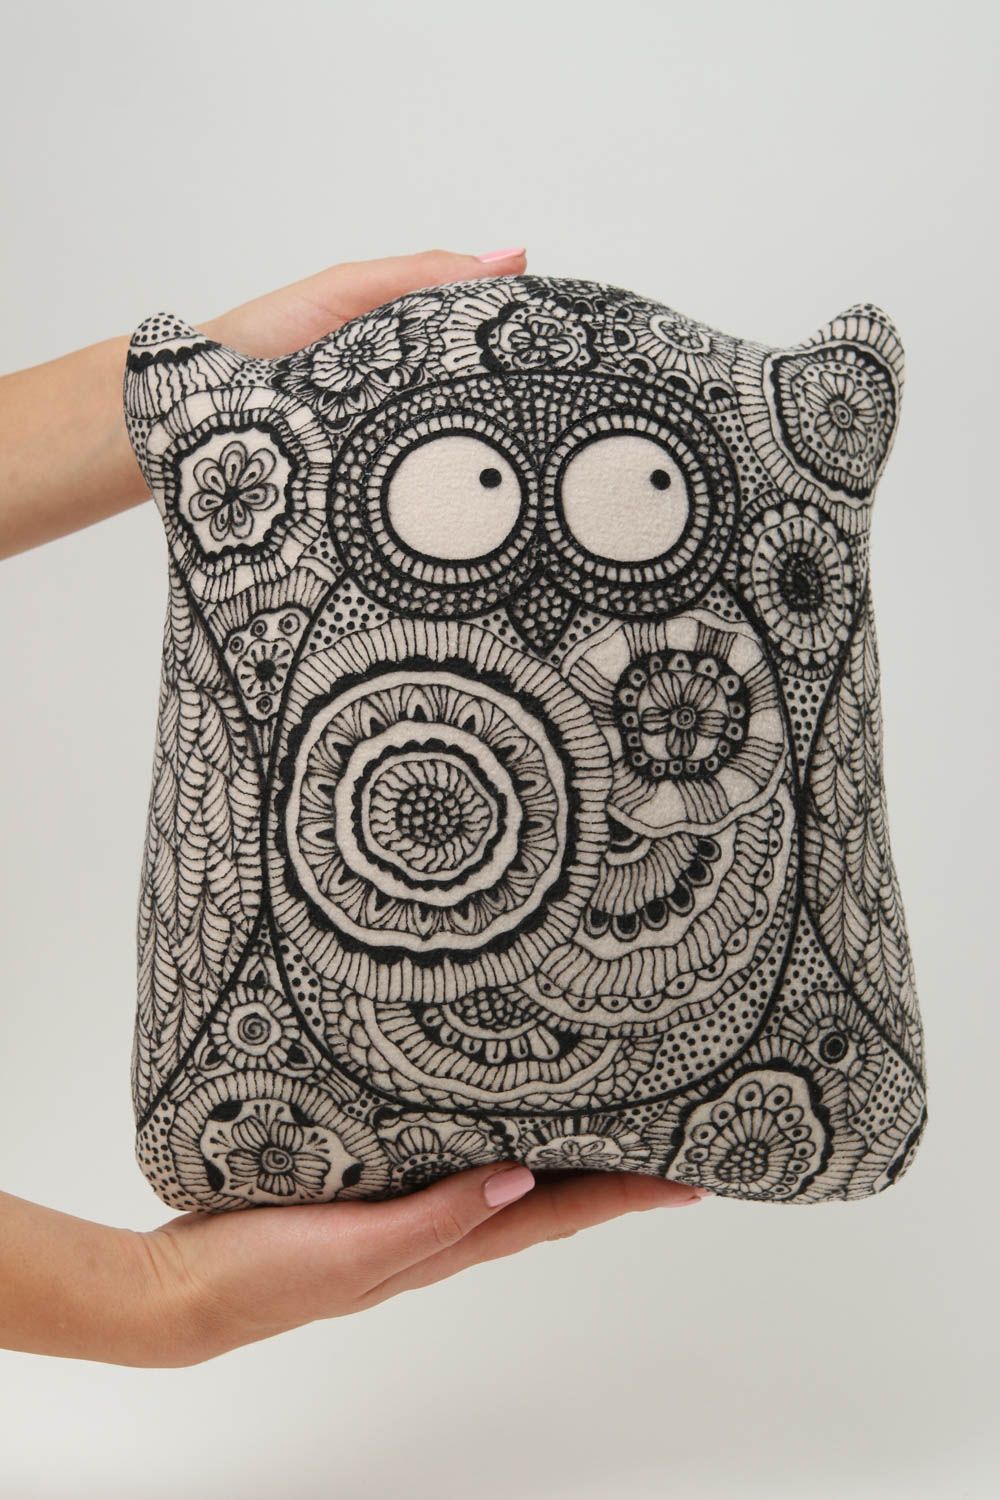 Handmade pet pillow decorative cushion handmade accessories home decor ideas photo 5